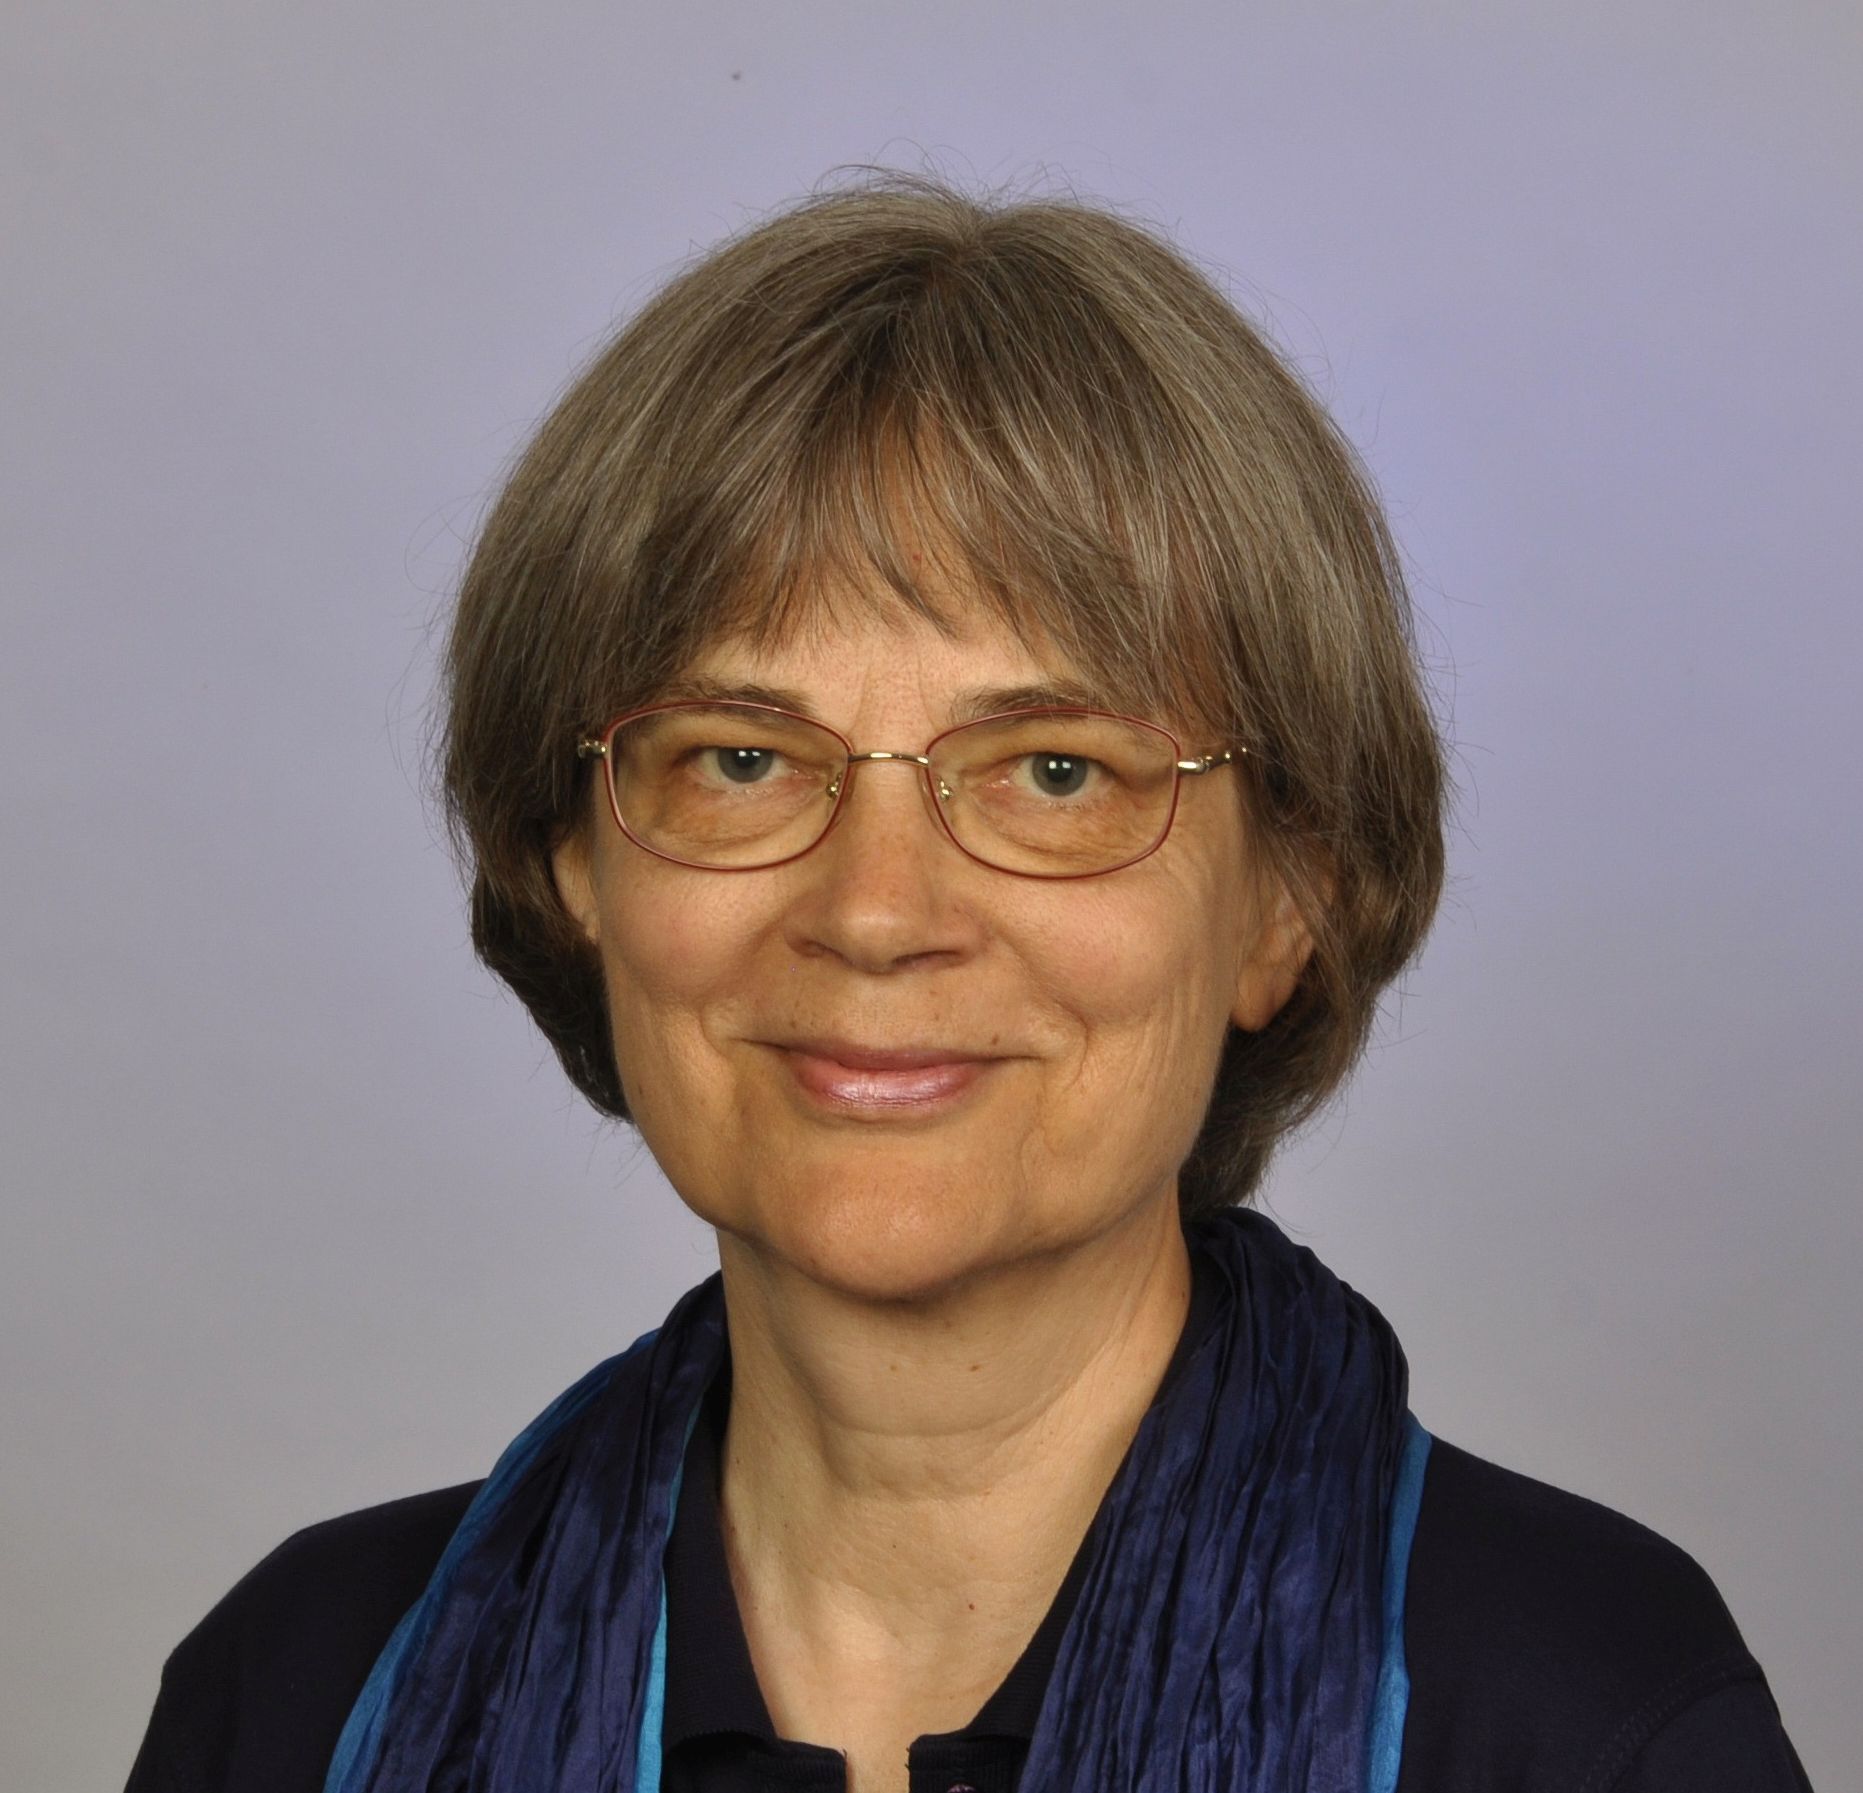 Katja Rambaum